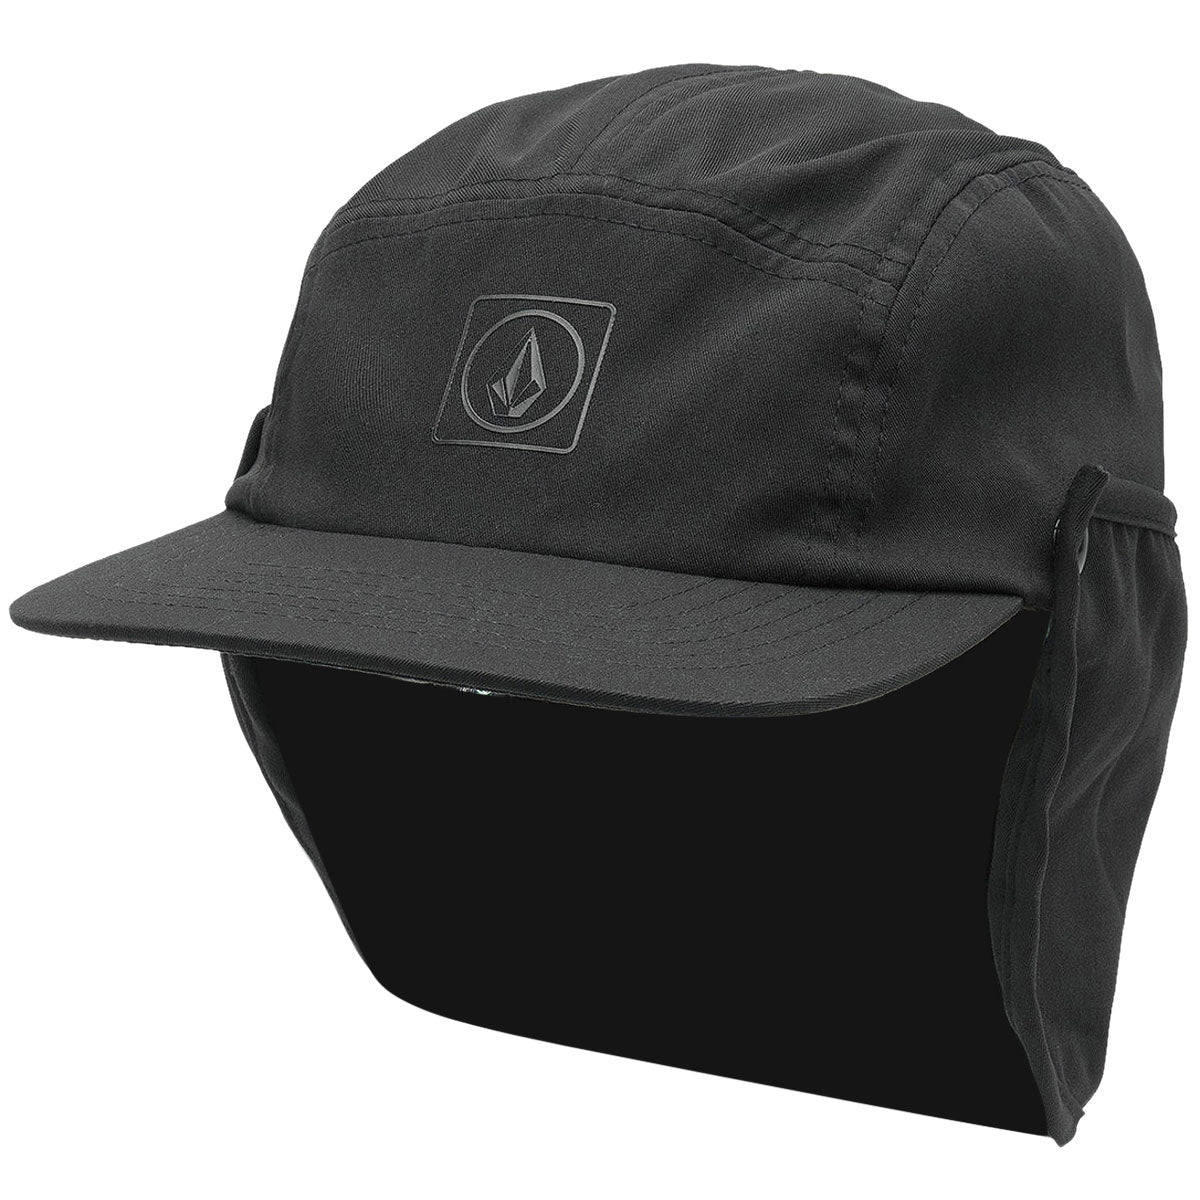 Volcom Stone Trip Flap Hat - Black image 1